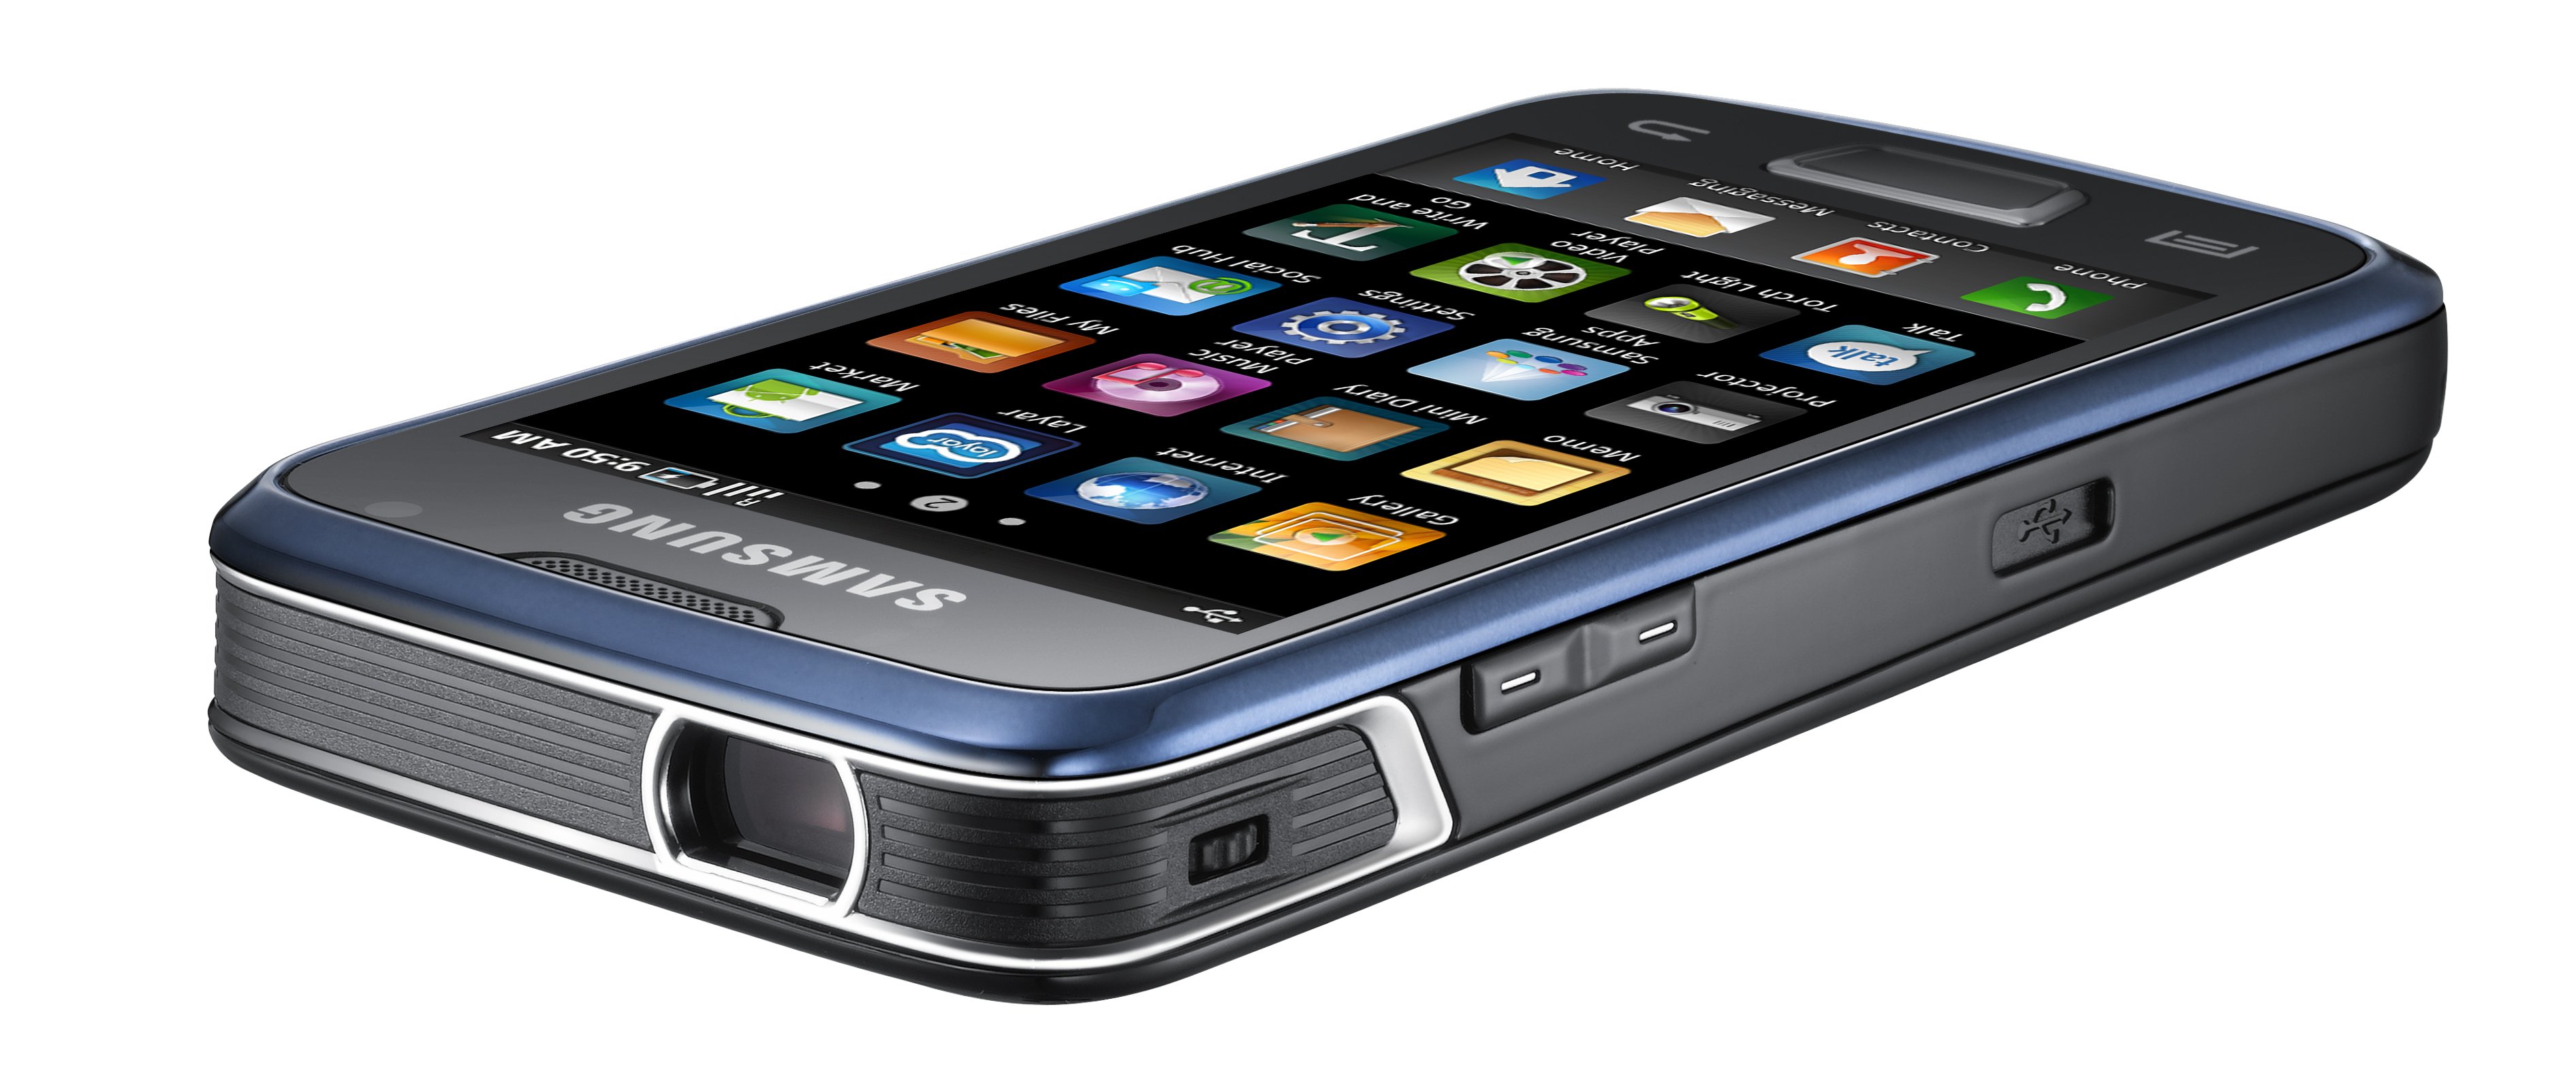 Samsung I8520 Galaxy Beam specs, review, release date - PhonesData